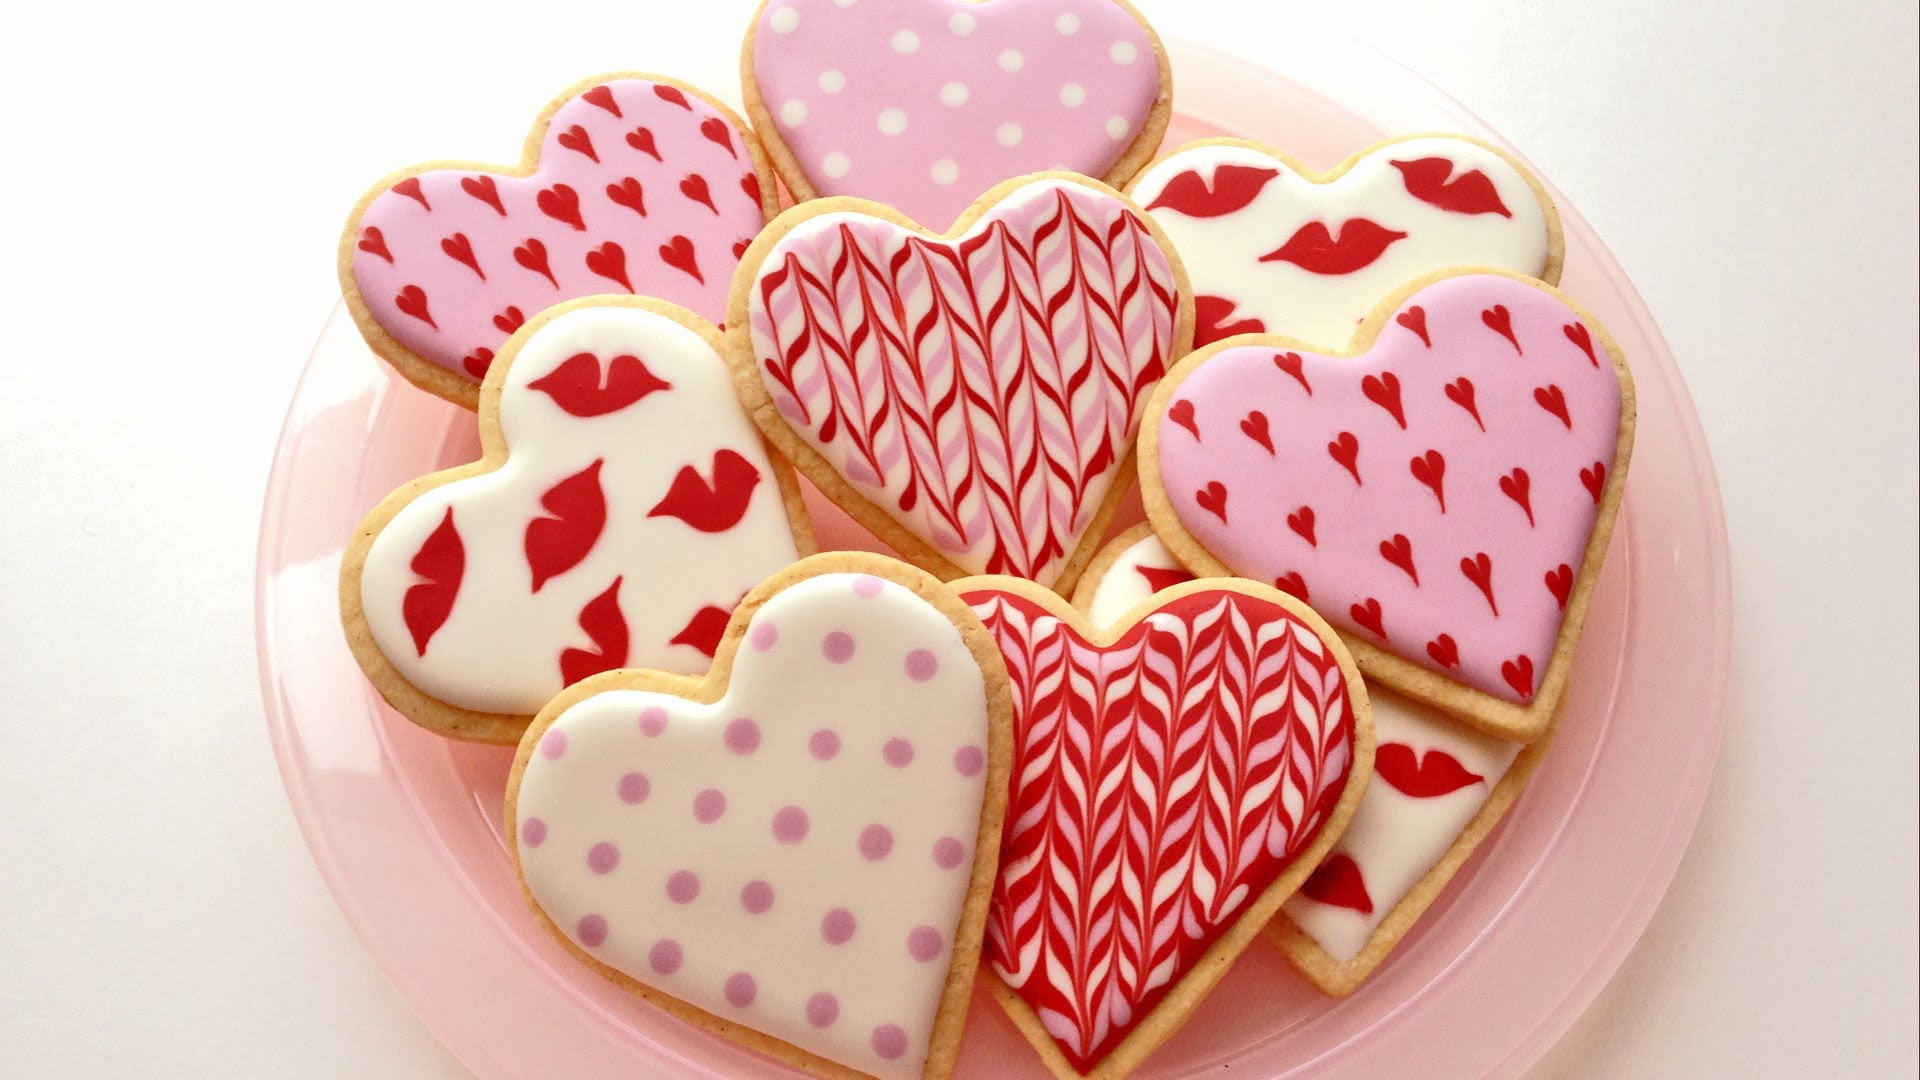 Valentine Sugar Cookies Decorating Ideas
 Sugar Cookies Wallpaper High Definition High Quality